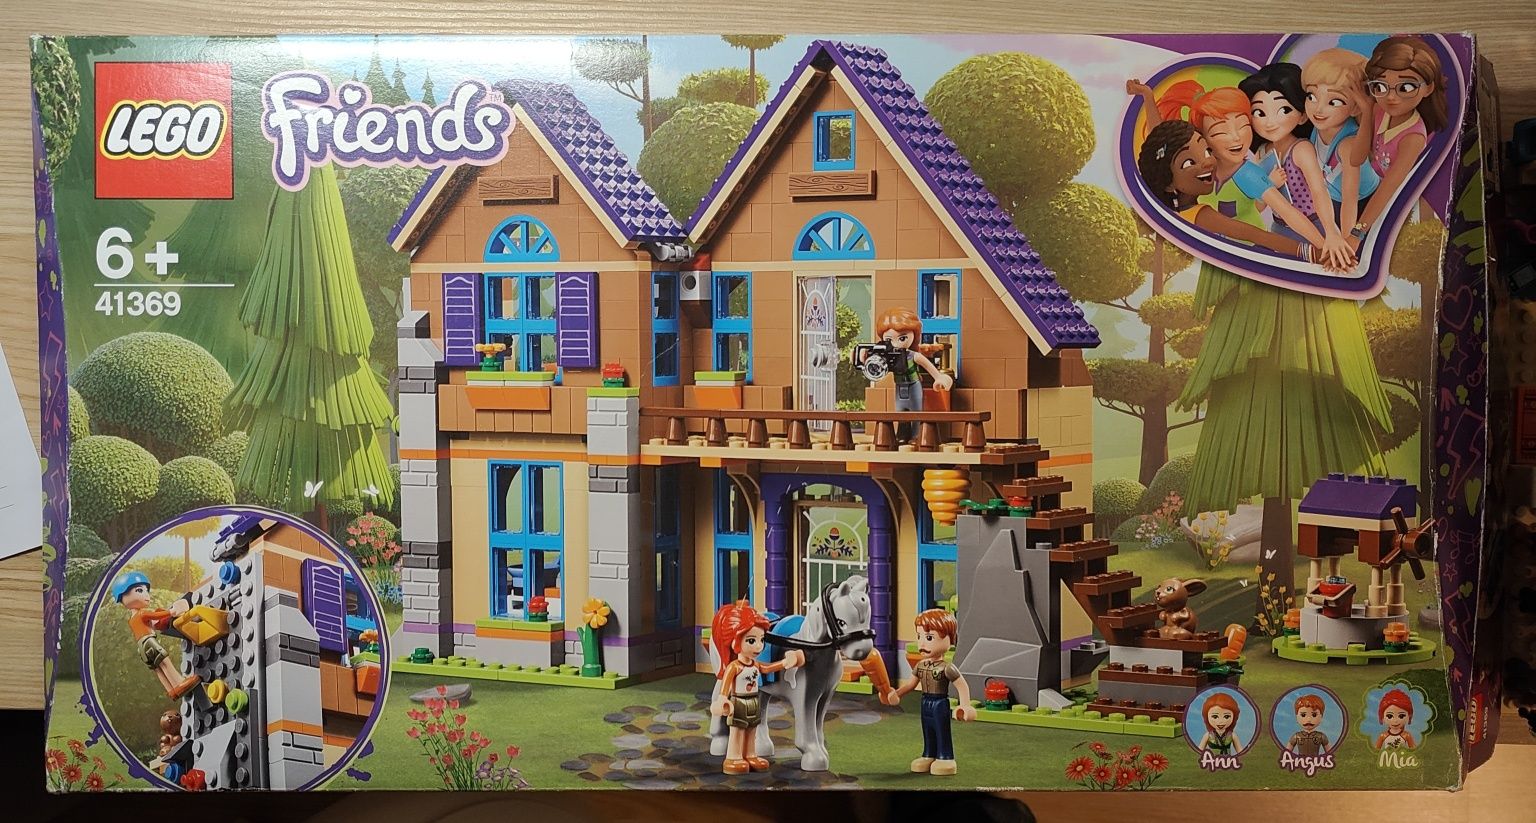 Lego Friends Set 41369